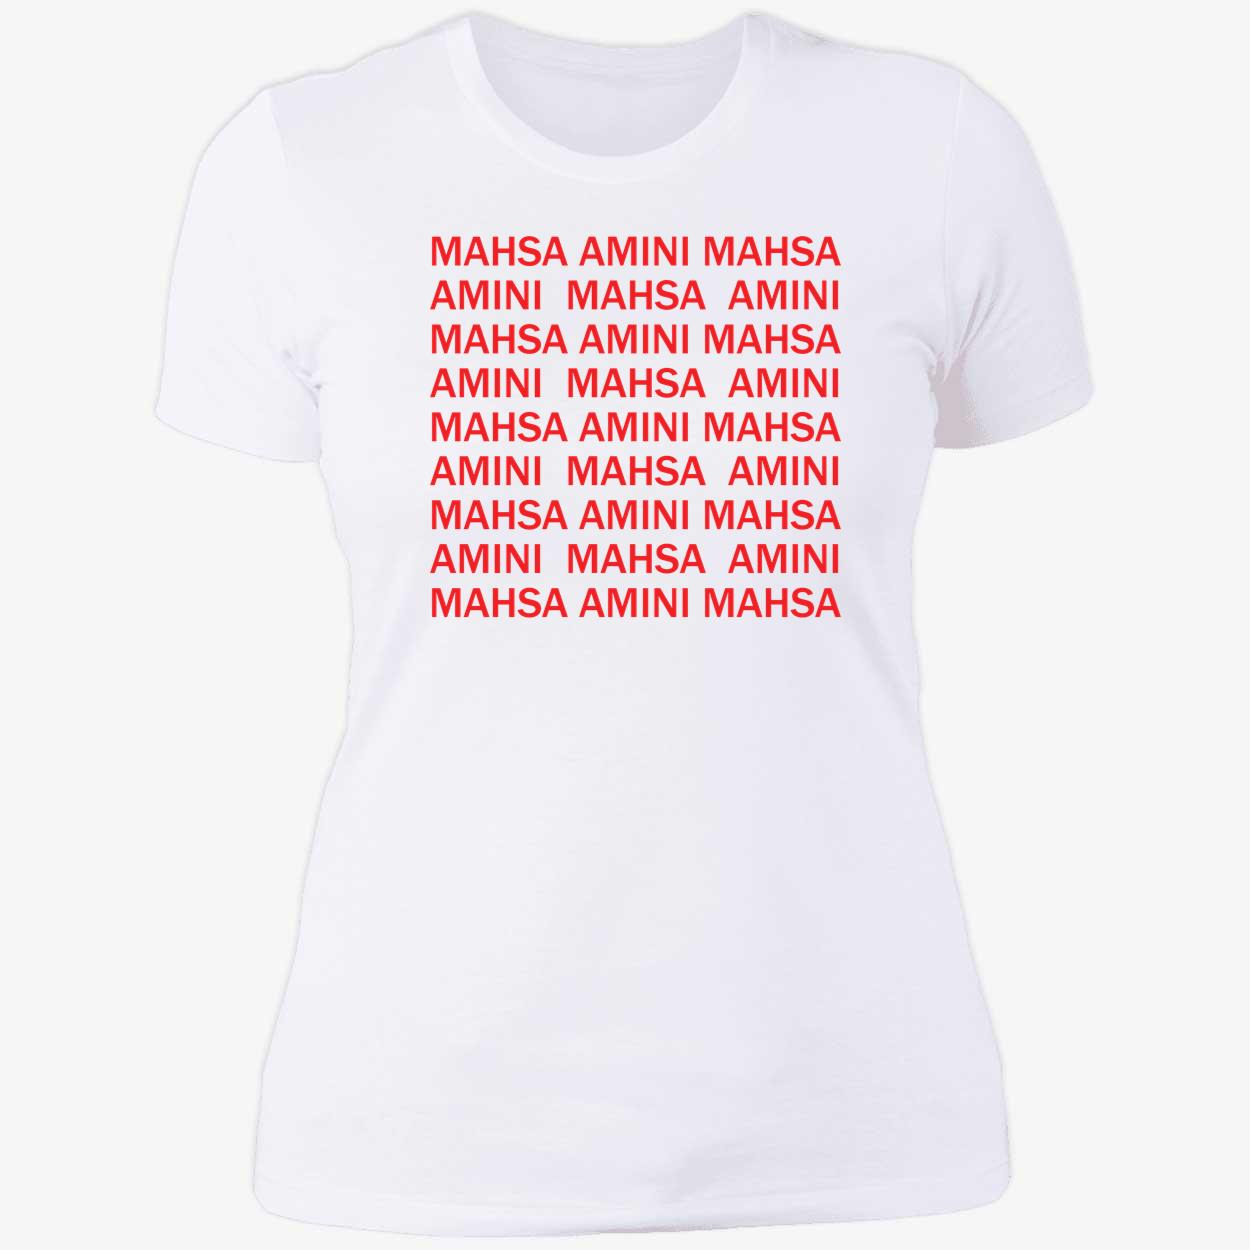 Mahsa Amini Mahsa Amini Mahsa Amini Ladies Boyfriend Shirt